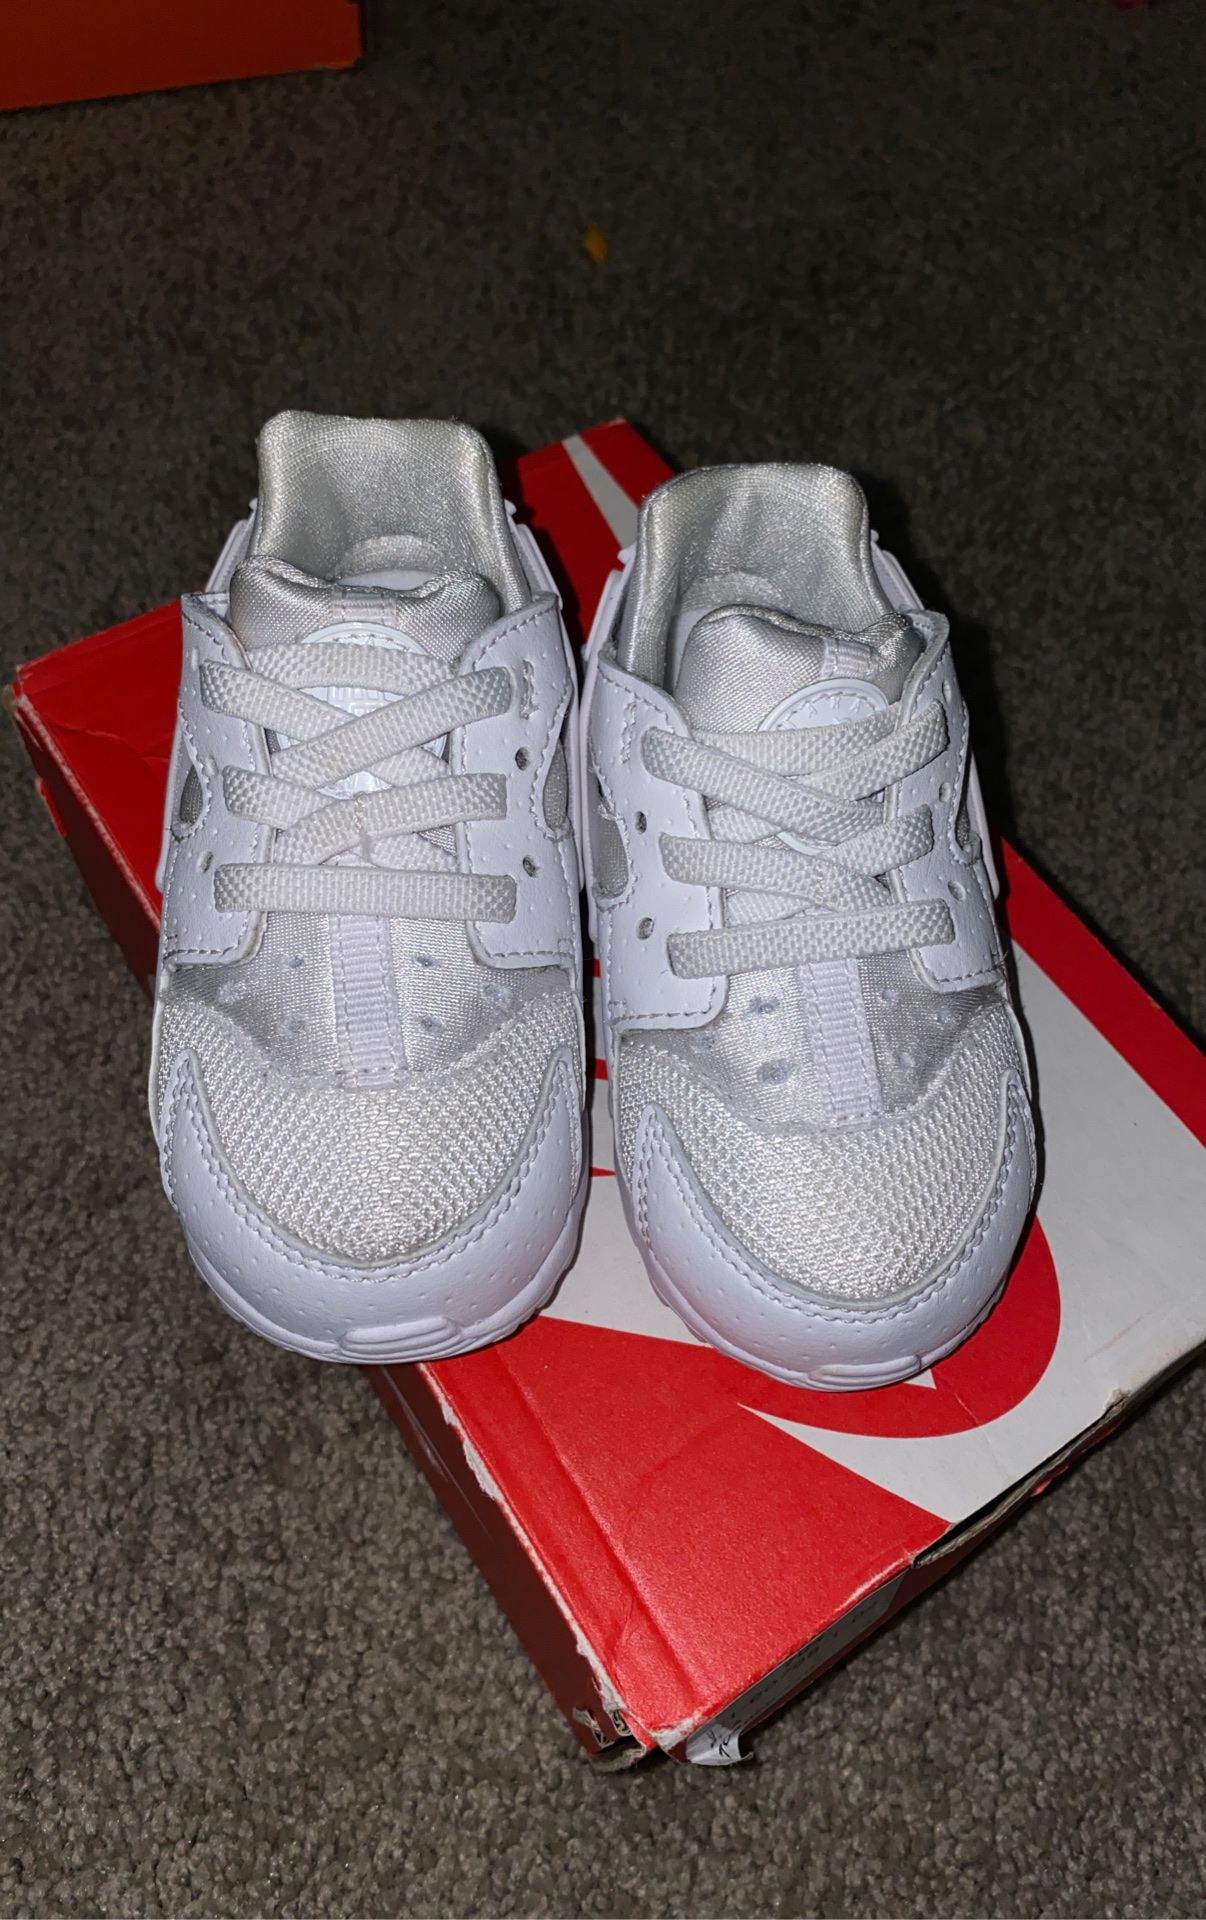 Baby Nikes size 5